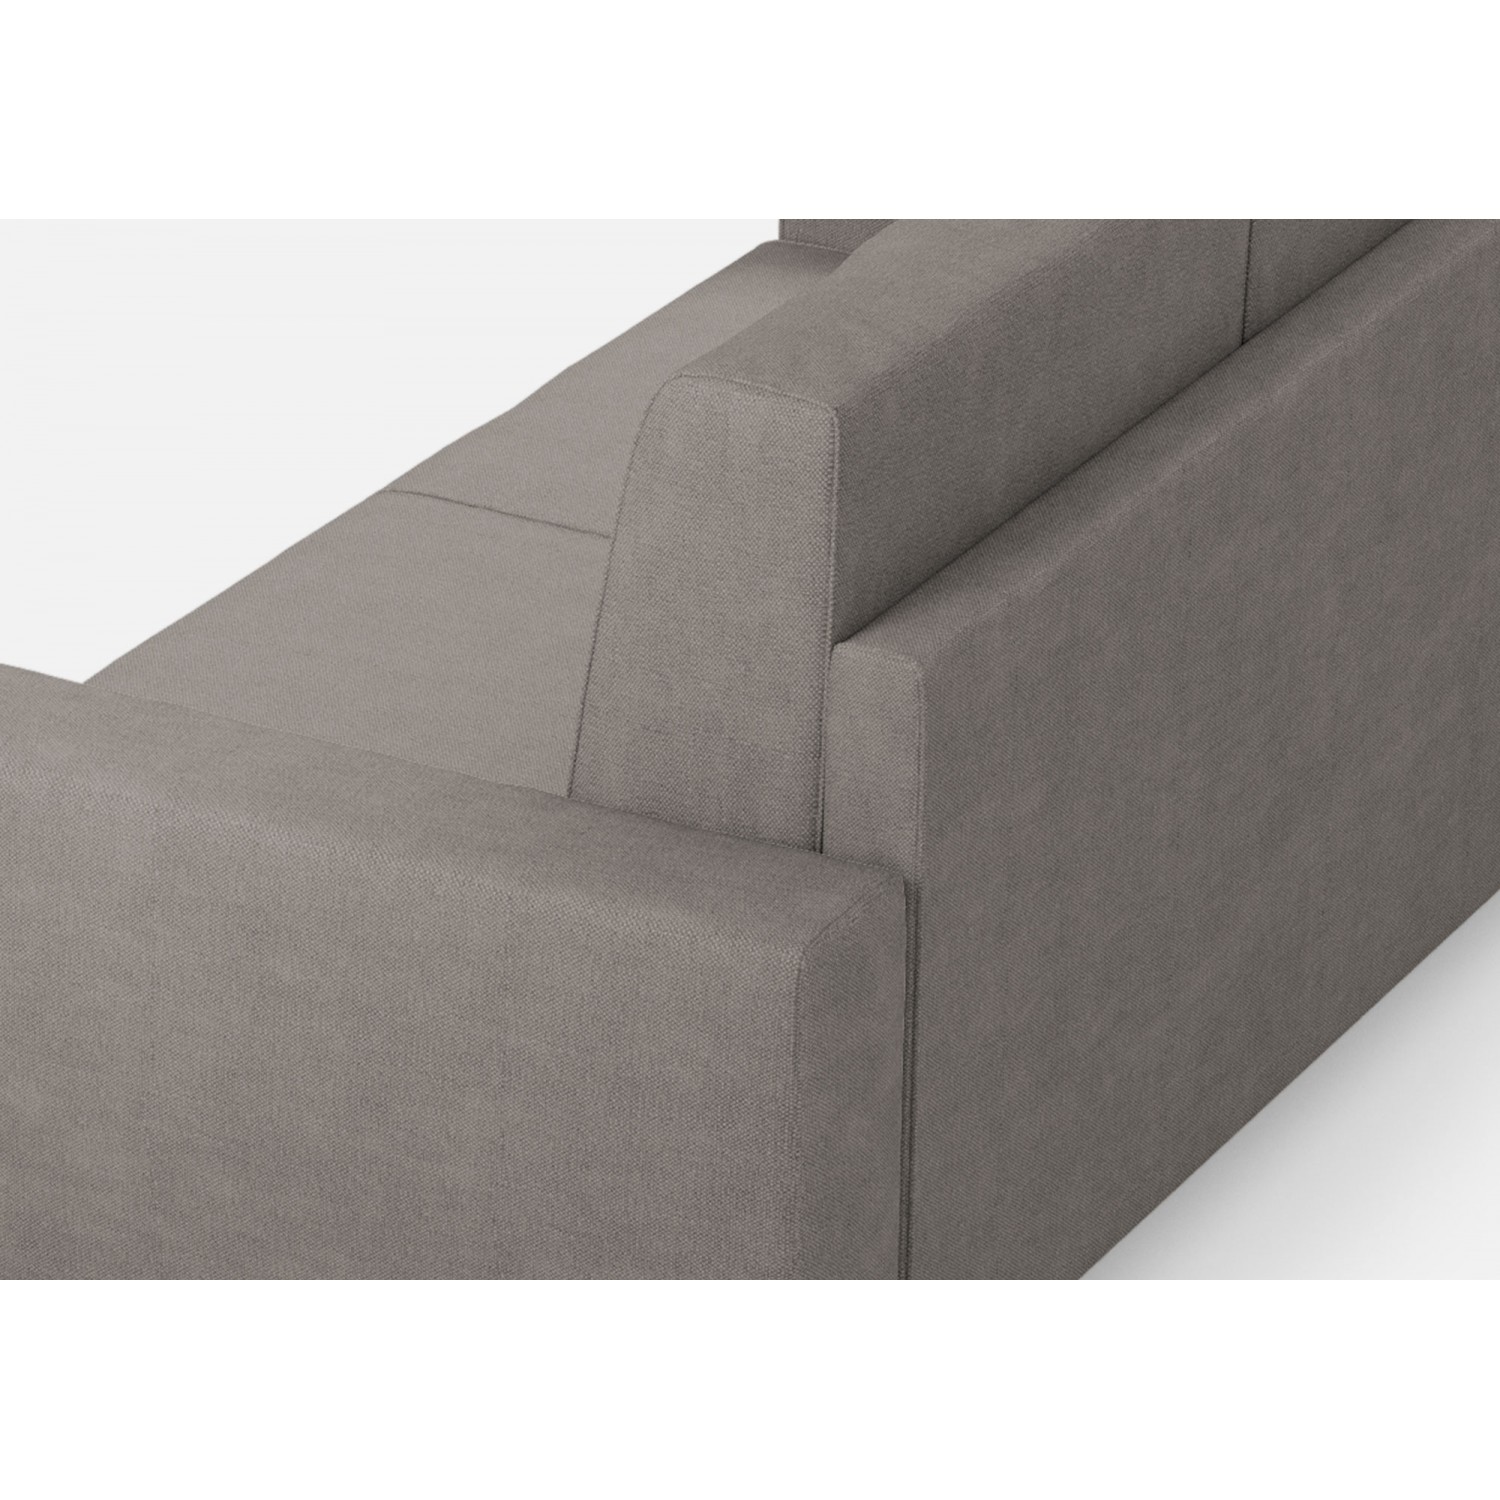 Ityhome Divano Sakar 2 posti (due sedute da 60cm)+ angolo + divano 2 posti (due sedute da 60cm) misure esterne L.226x226 colore grigio